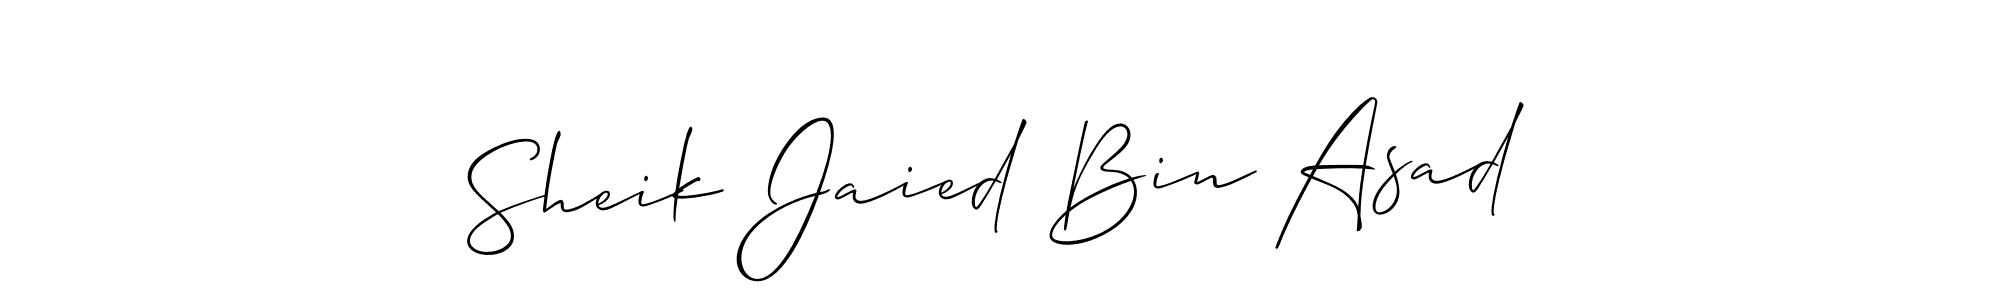 How to Draw Sheik Jaied Bin Asad signature style? Allison_Script is a latest design signature styles for name Sheik Jaied Bin Asad. Sheik Jaied Bin Asad signature style 2 images and pictures png